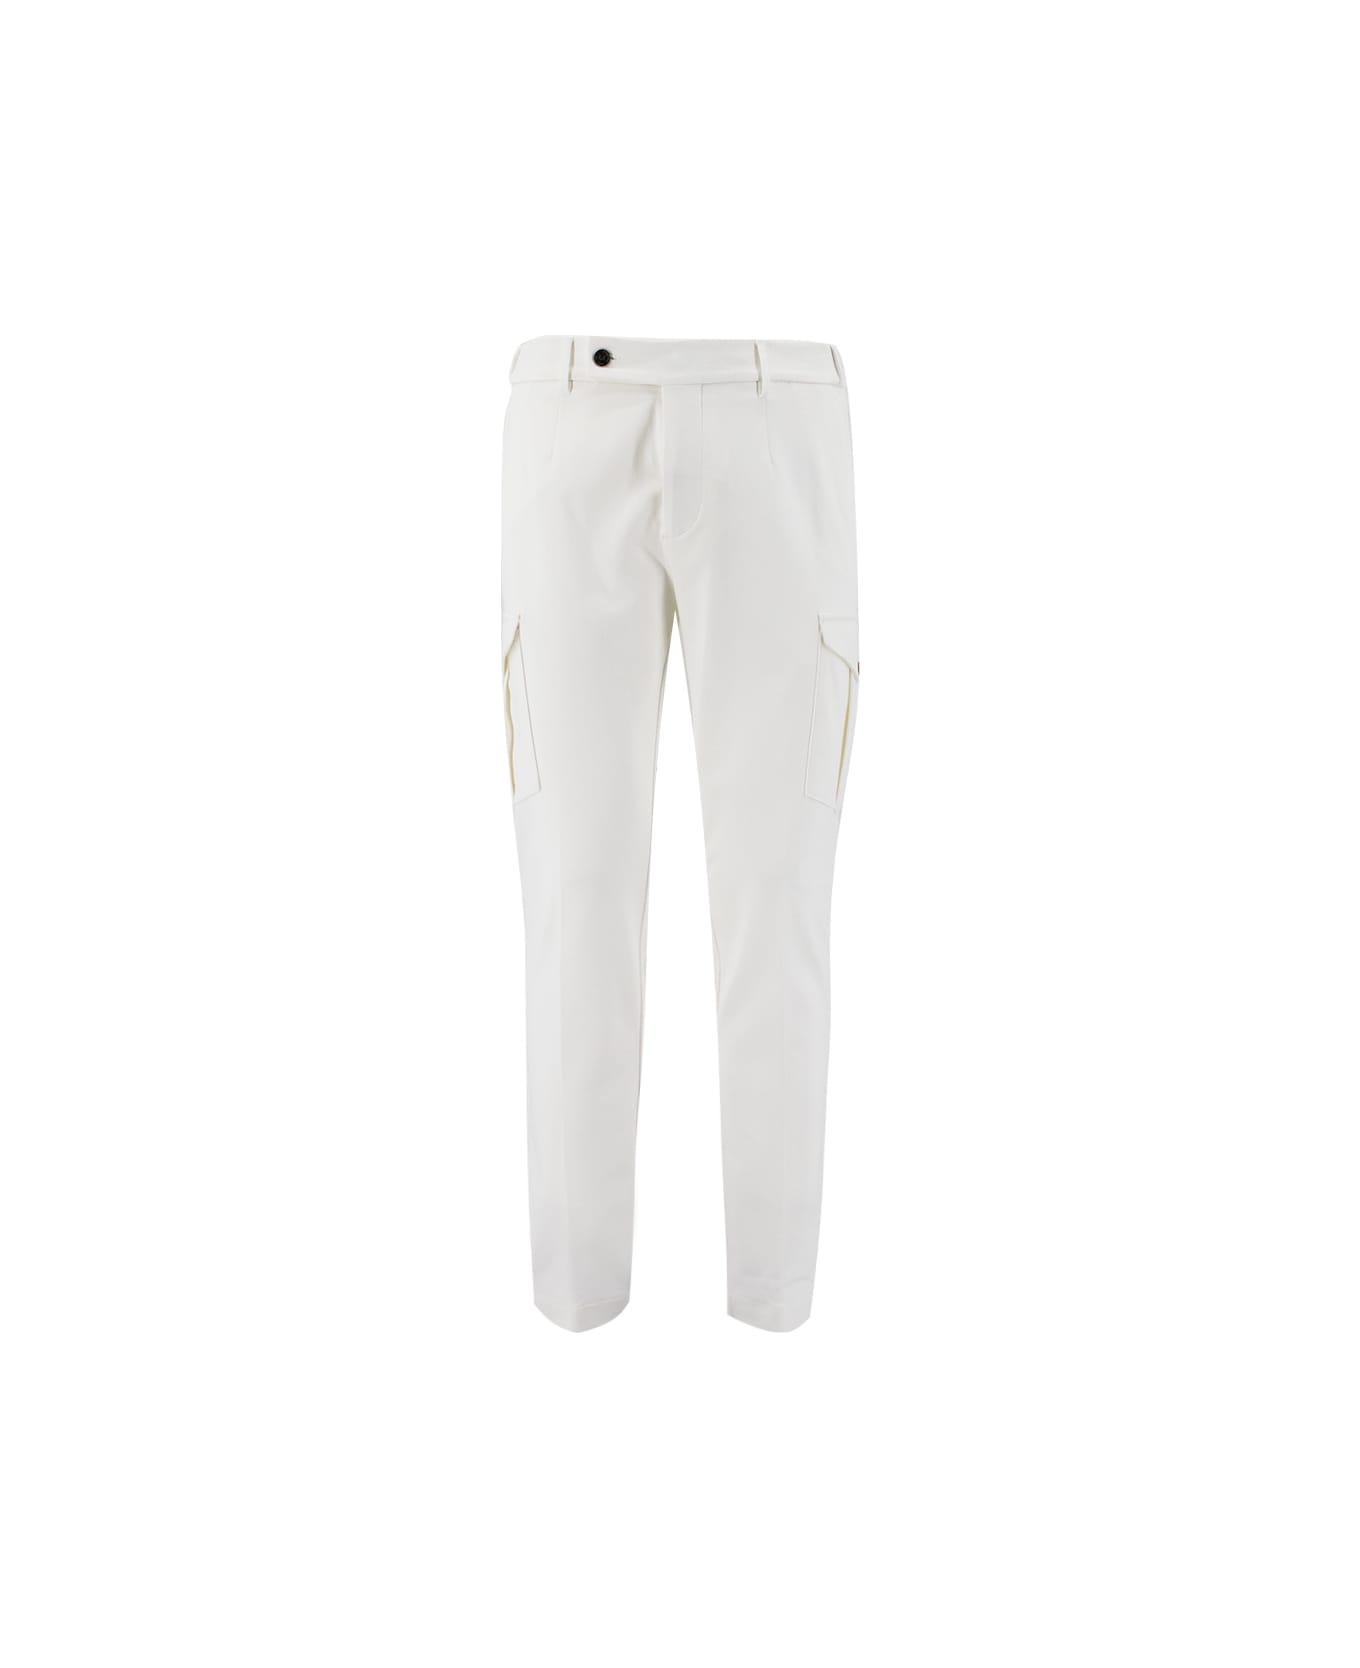 Berwich Trousers - WHITE ボトムス